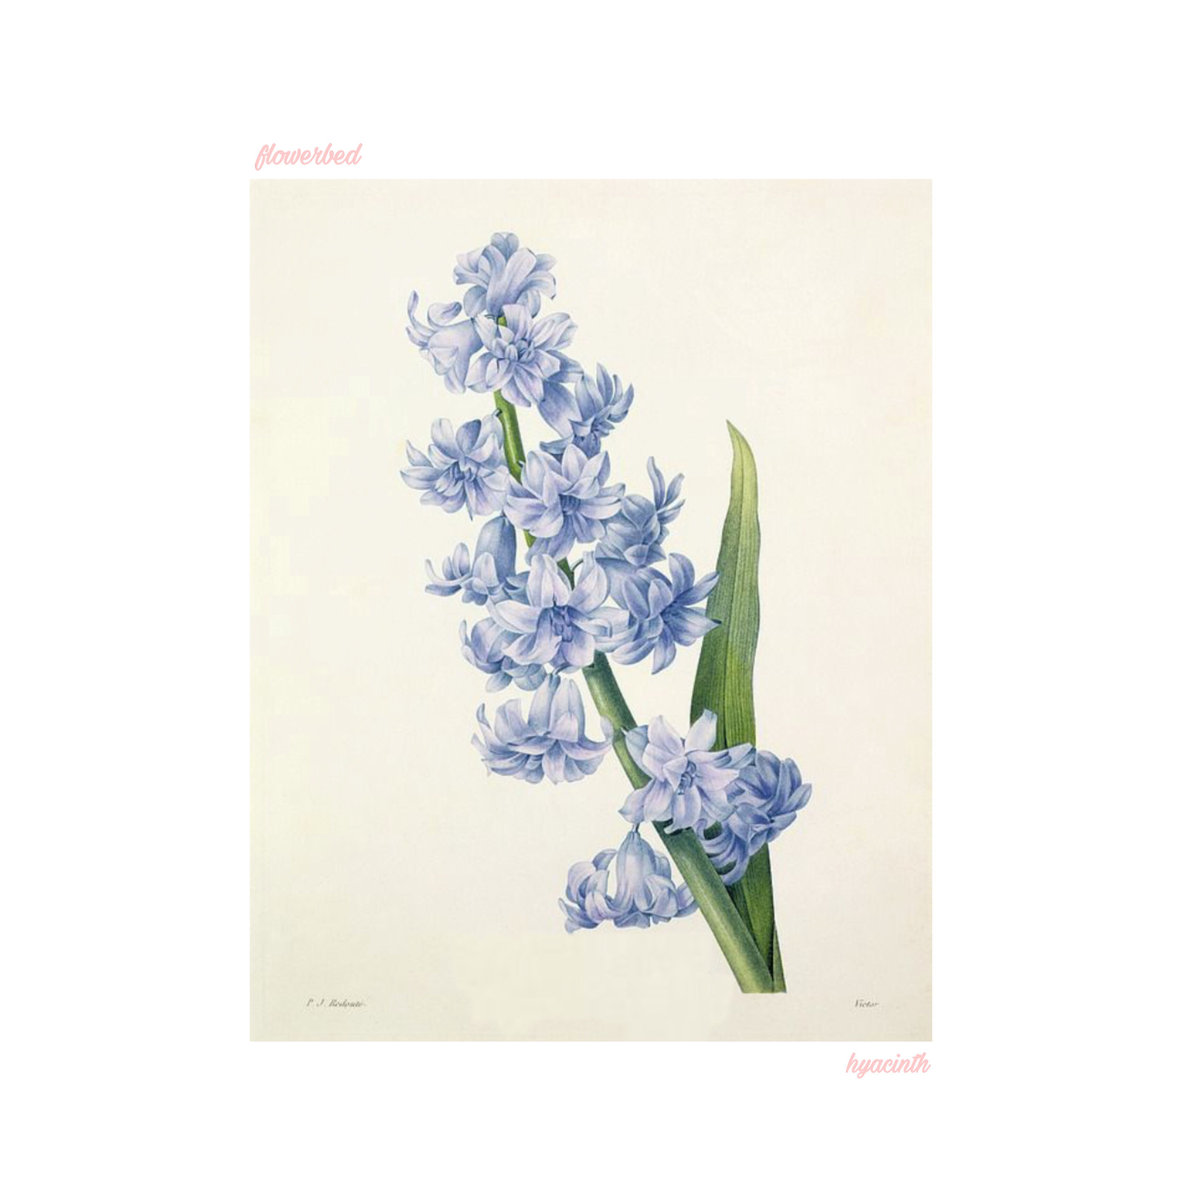 flowerbed – “hyacinth”